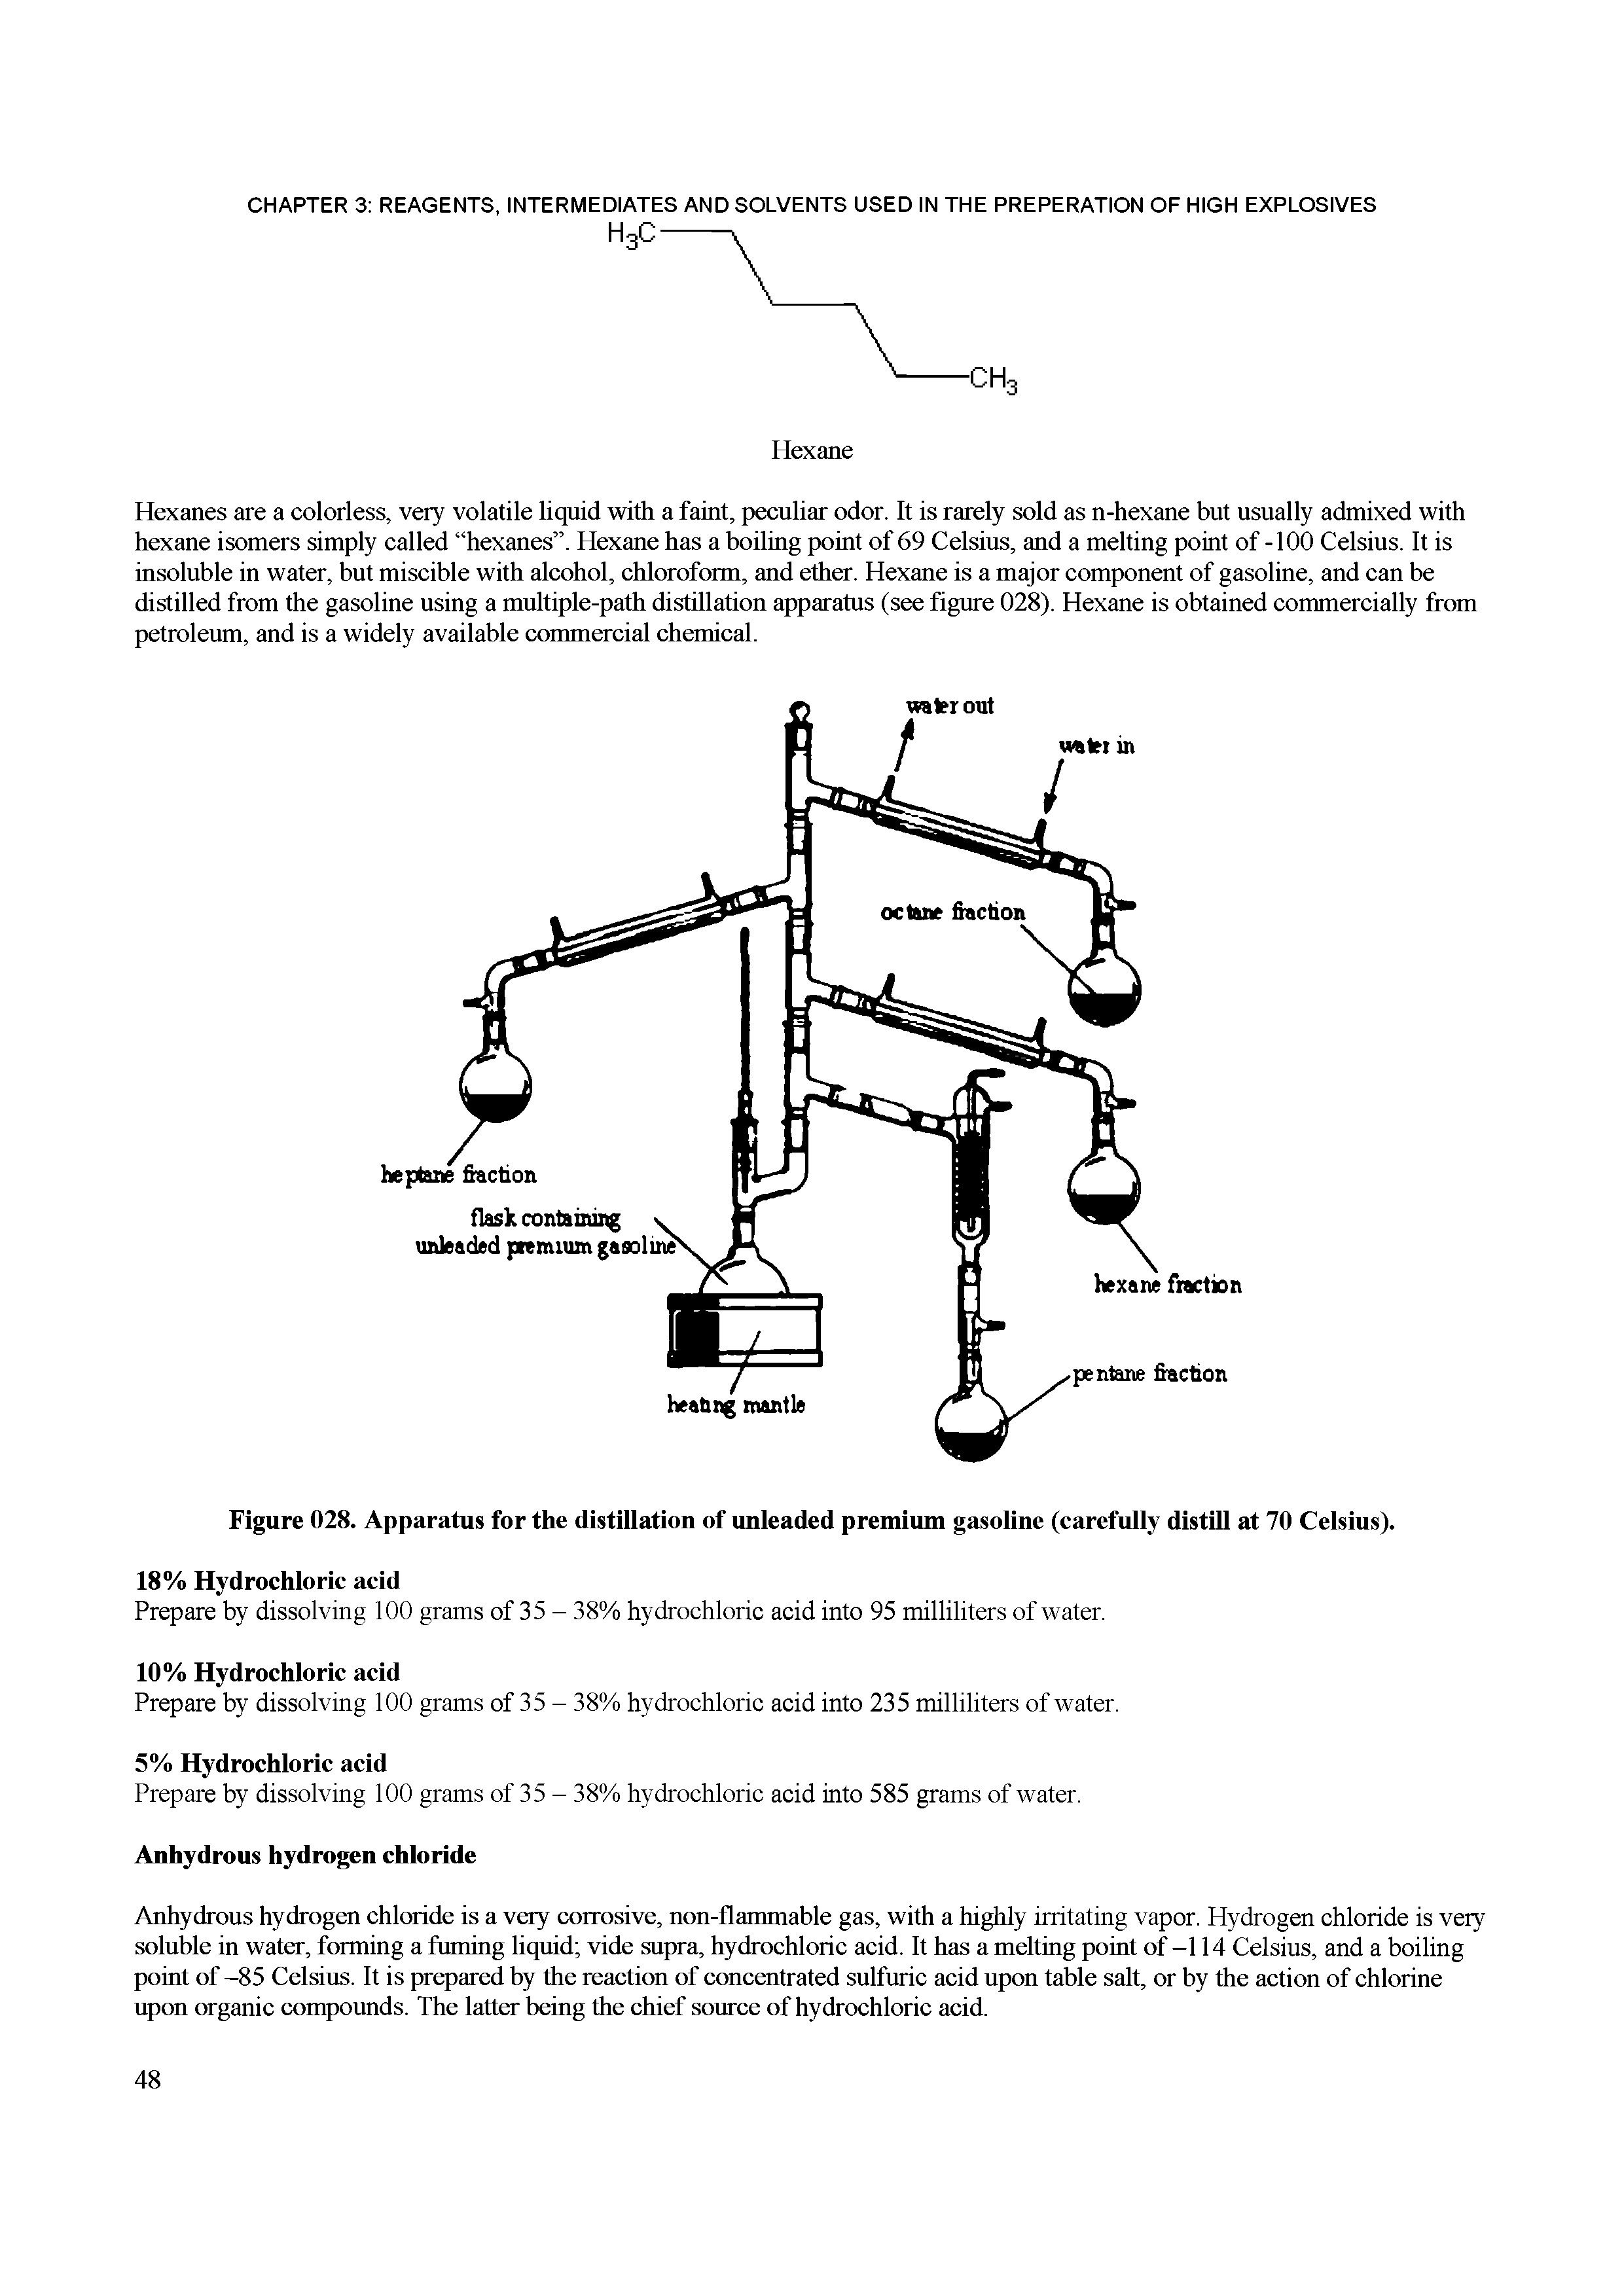 Figure 028. Apparatus for the distillation of unleaded premium gasoline (carefully distill at 70 Celsius).